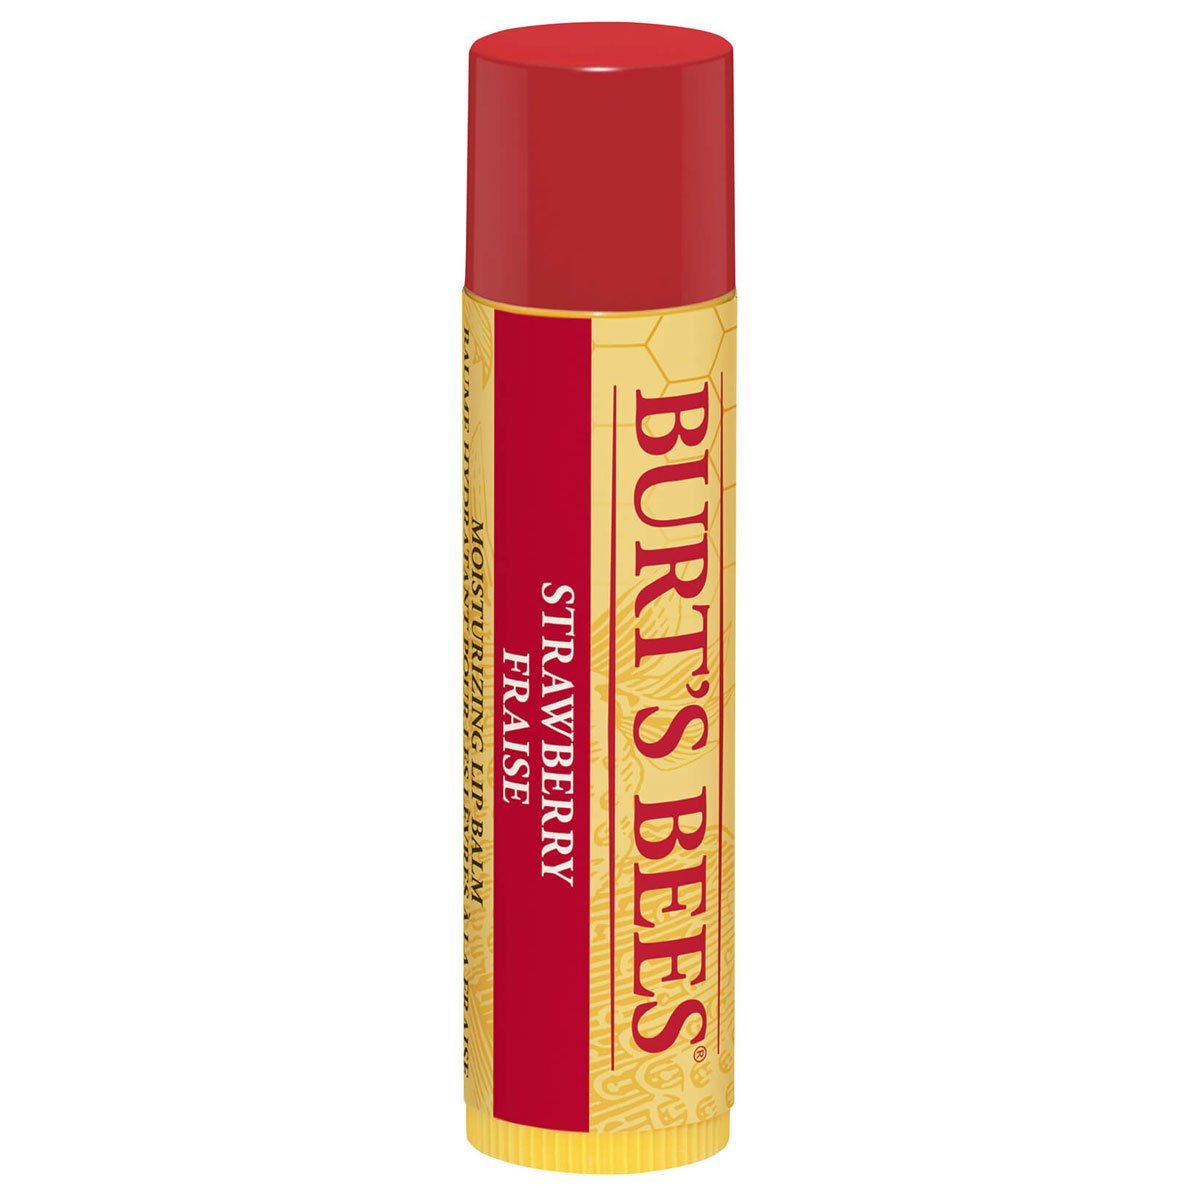 Burt's Bees Strawberry Stick Lip Balm 4.25g